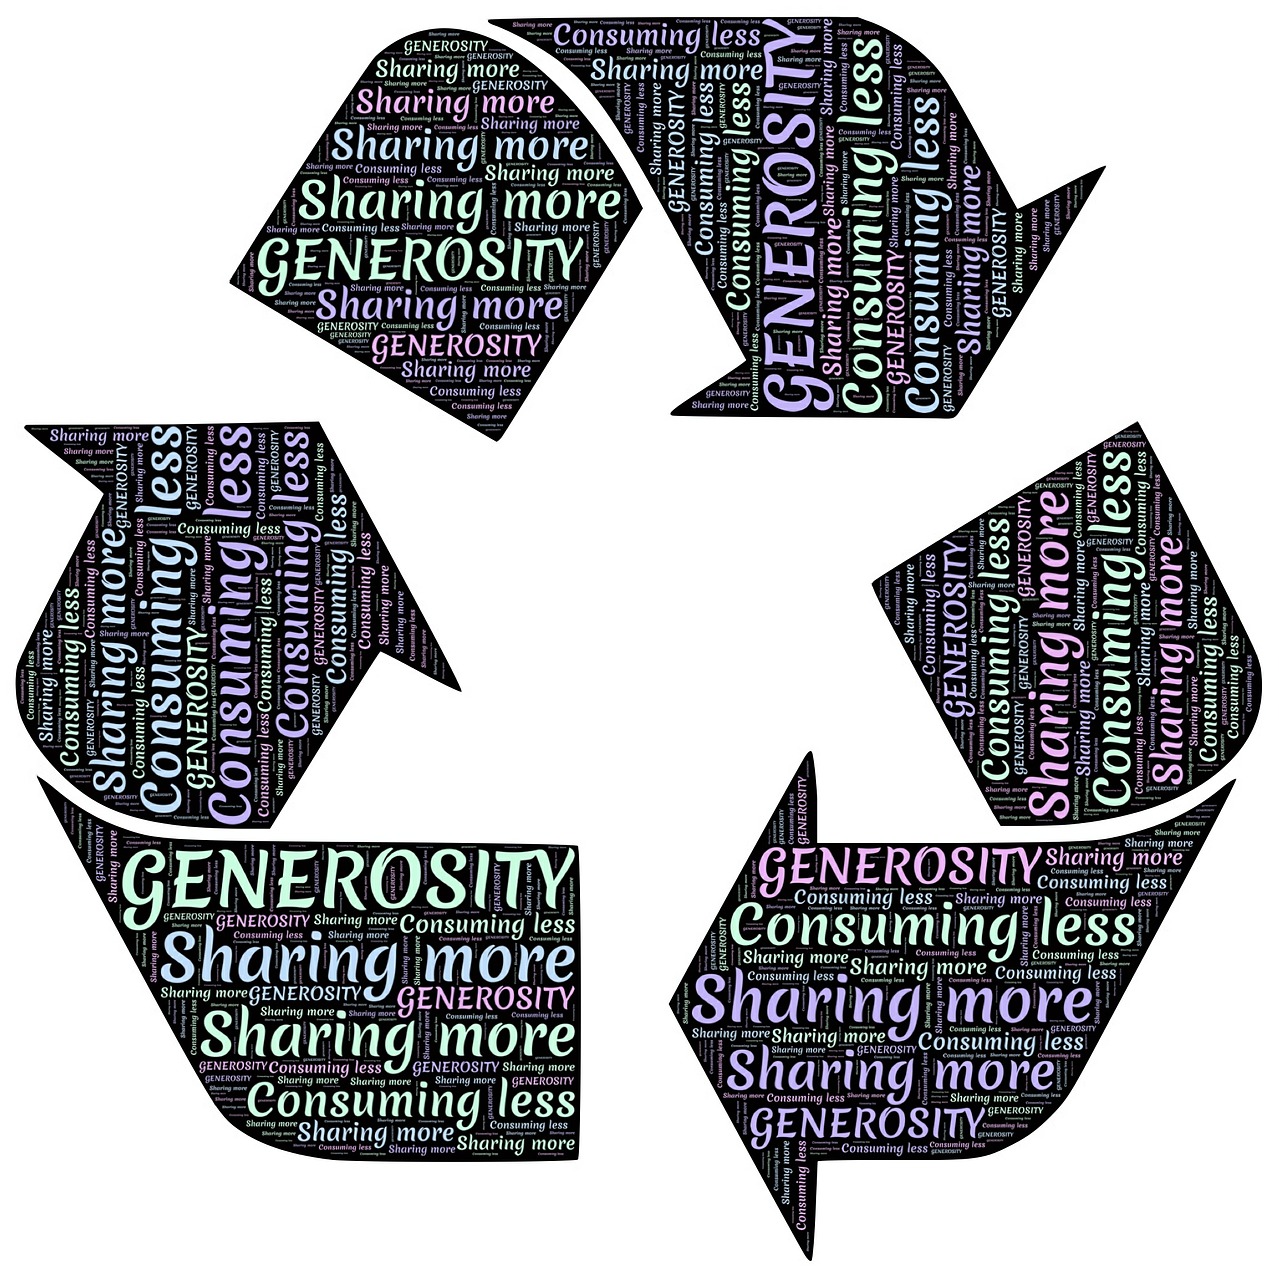 consumption recycling generosity free photo